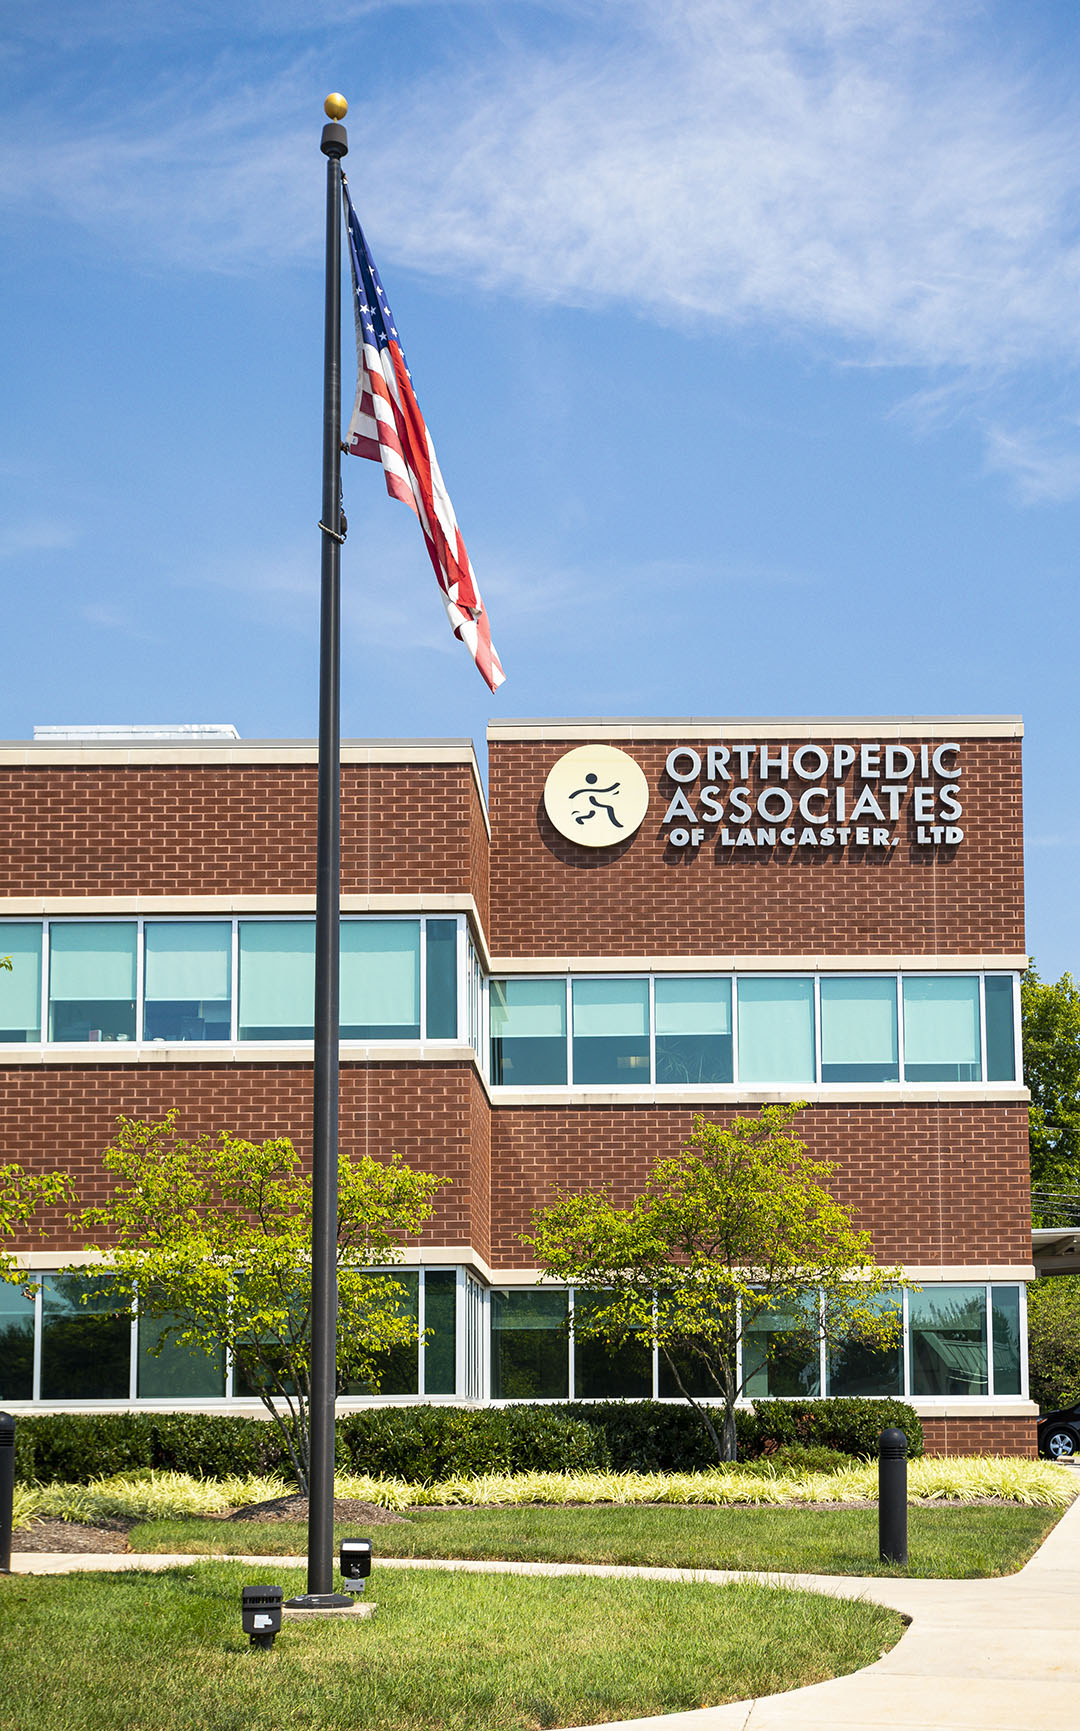 Orthopedic Associates of Lancaster, LTD.